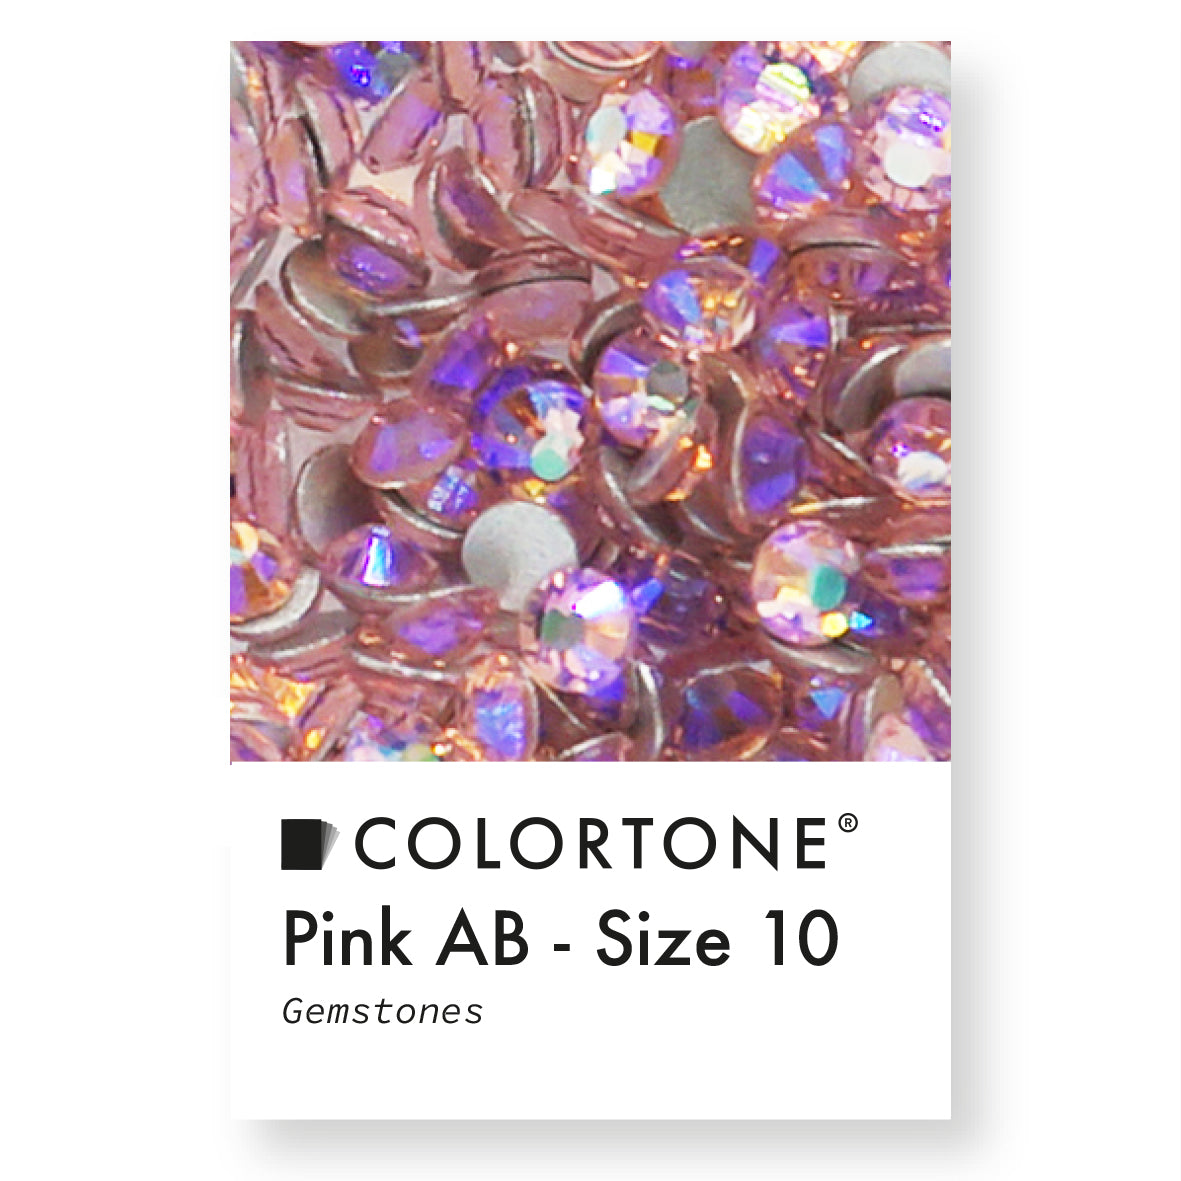 Pink Aurora Borealis Gemstones - Size 10